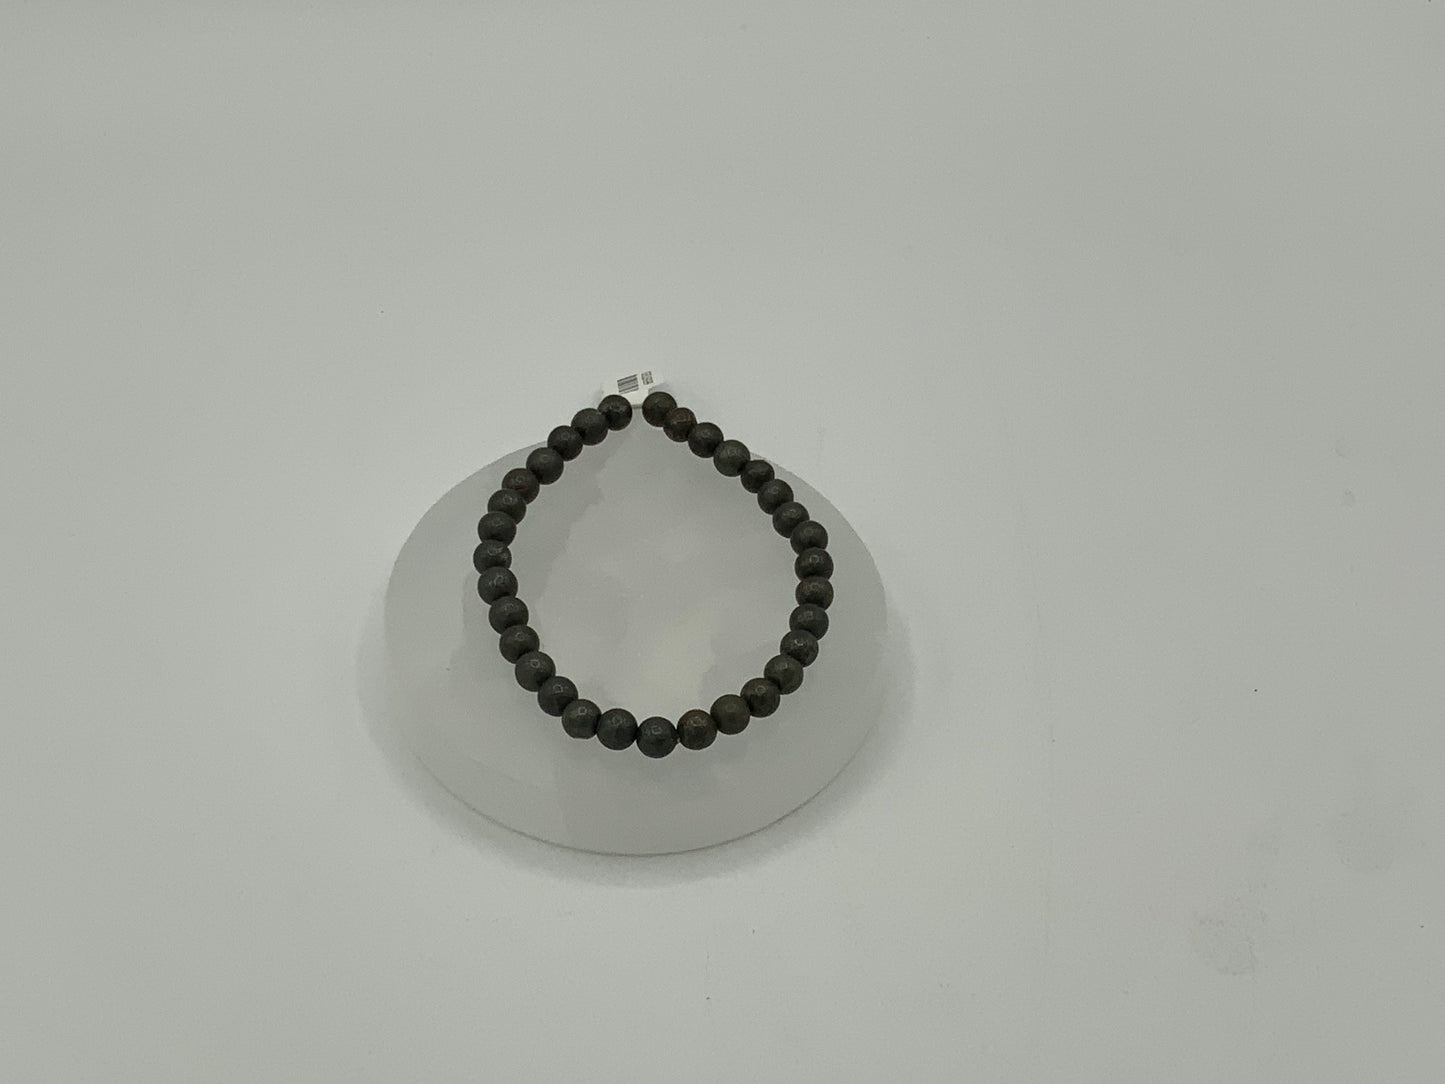 6 mm Gemstone Bracelet